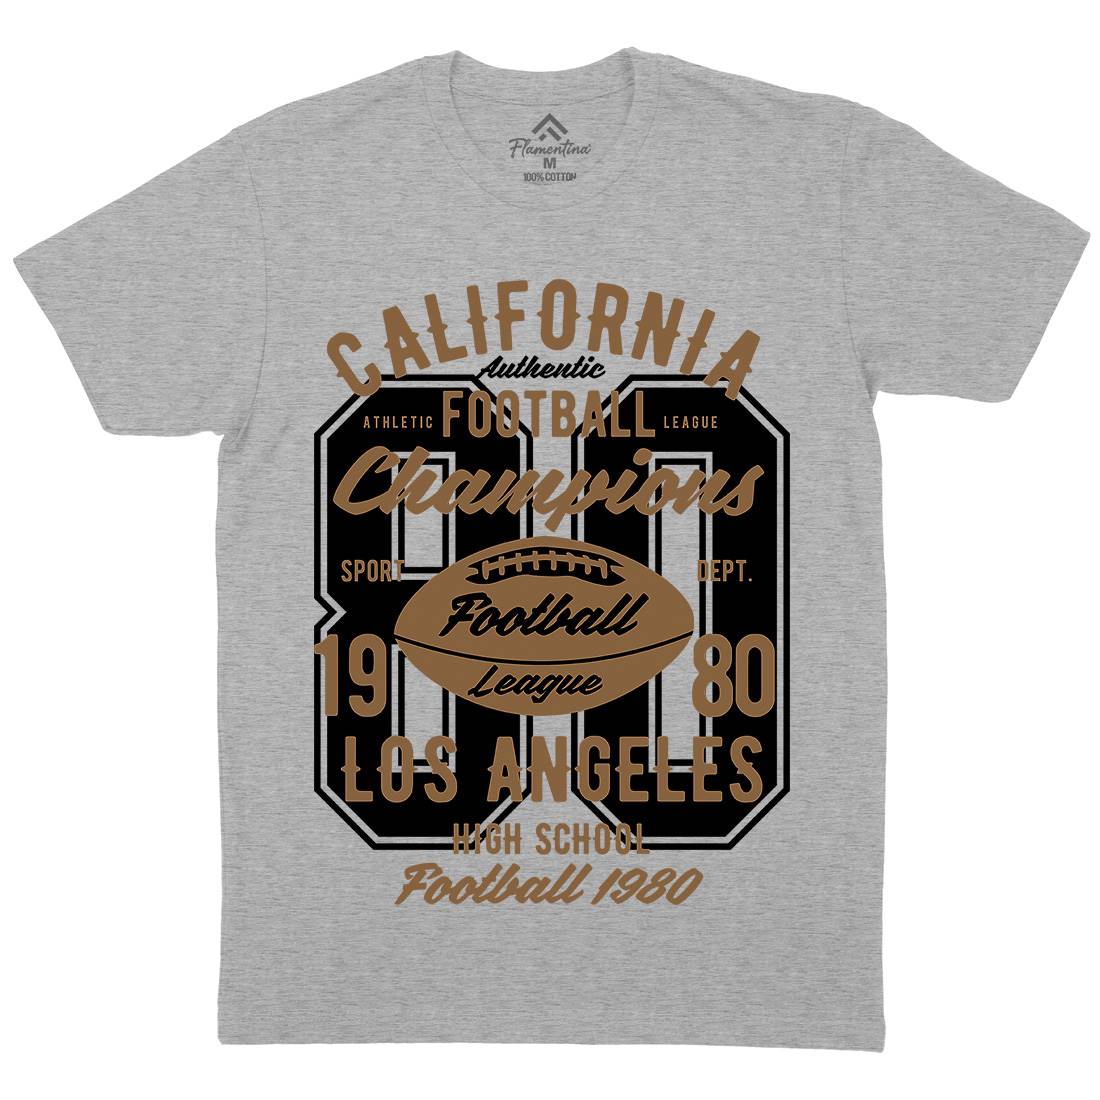 California Football League Mens Crew Neck T-Shirt Sport B193